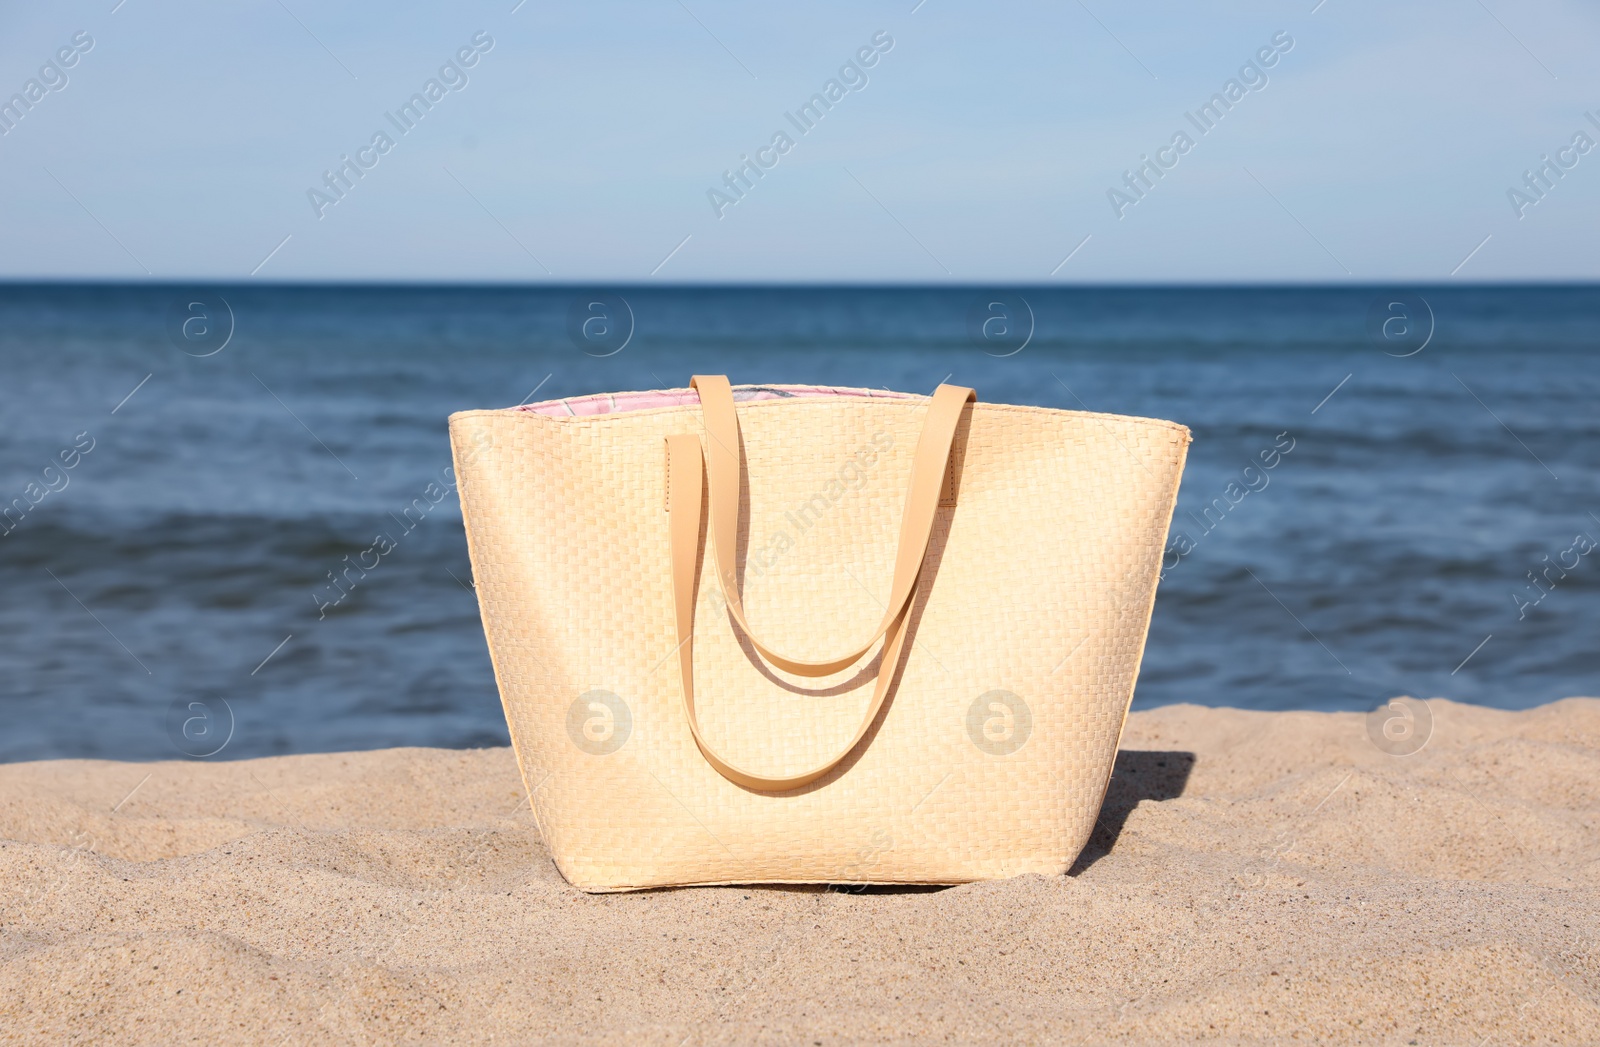 Photo of Stylish summer bag on sand near sea. Beach accessory